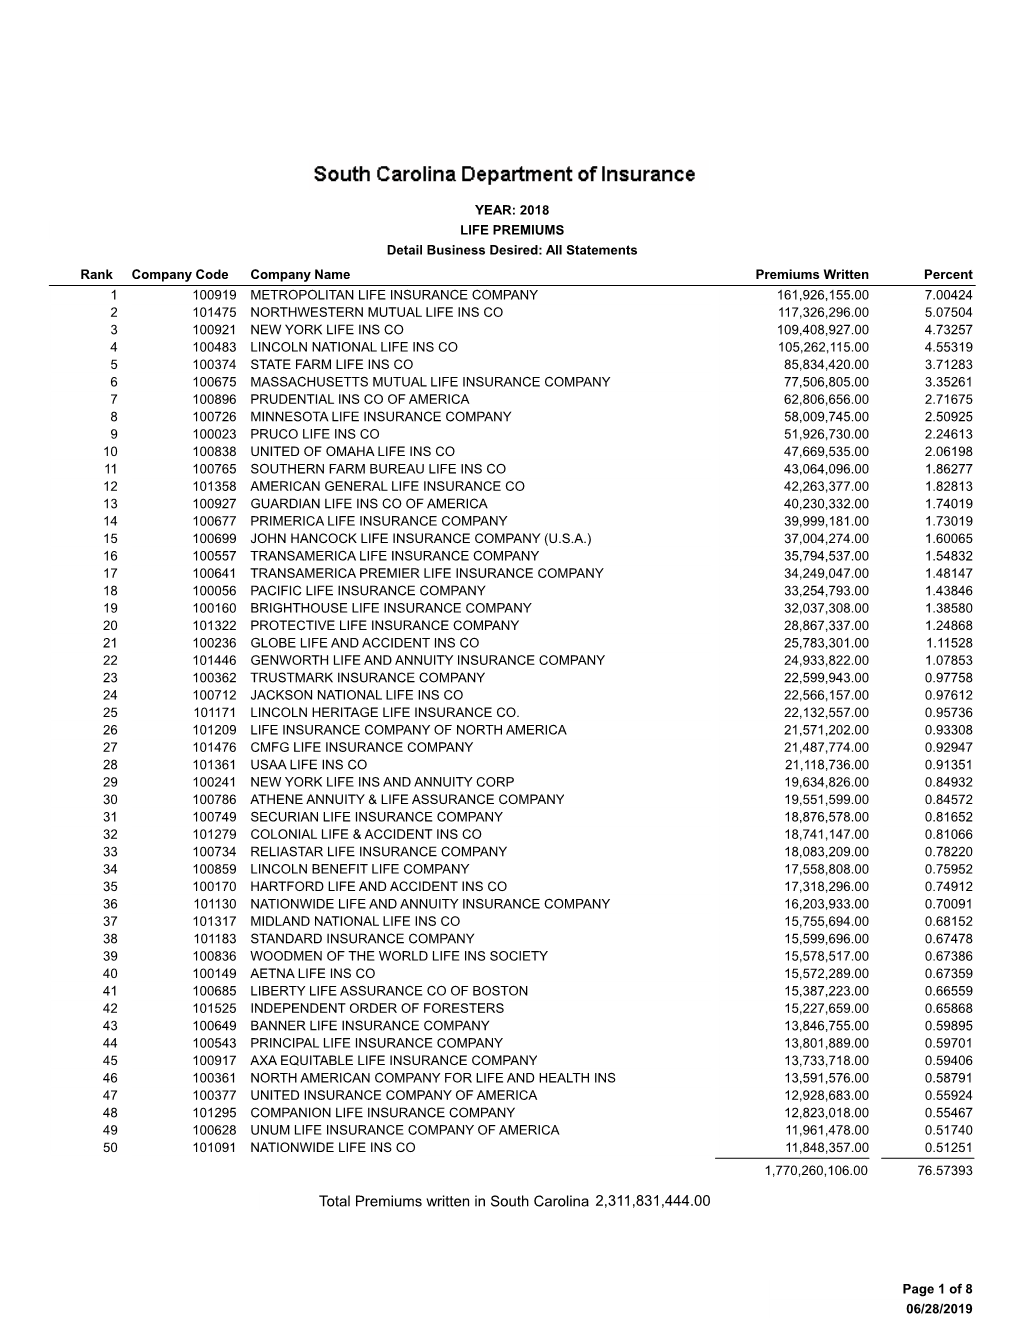 Total Premiums Written in South Carolina 2,311,831,444.00